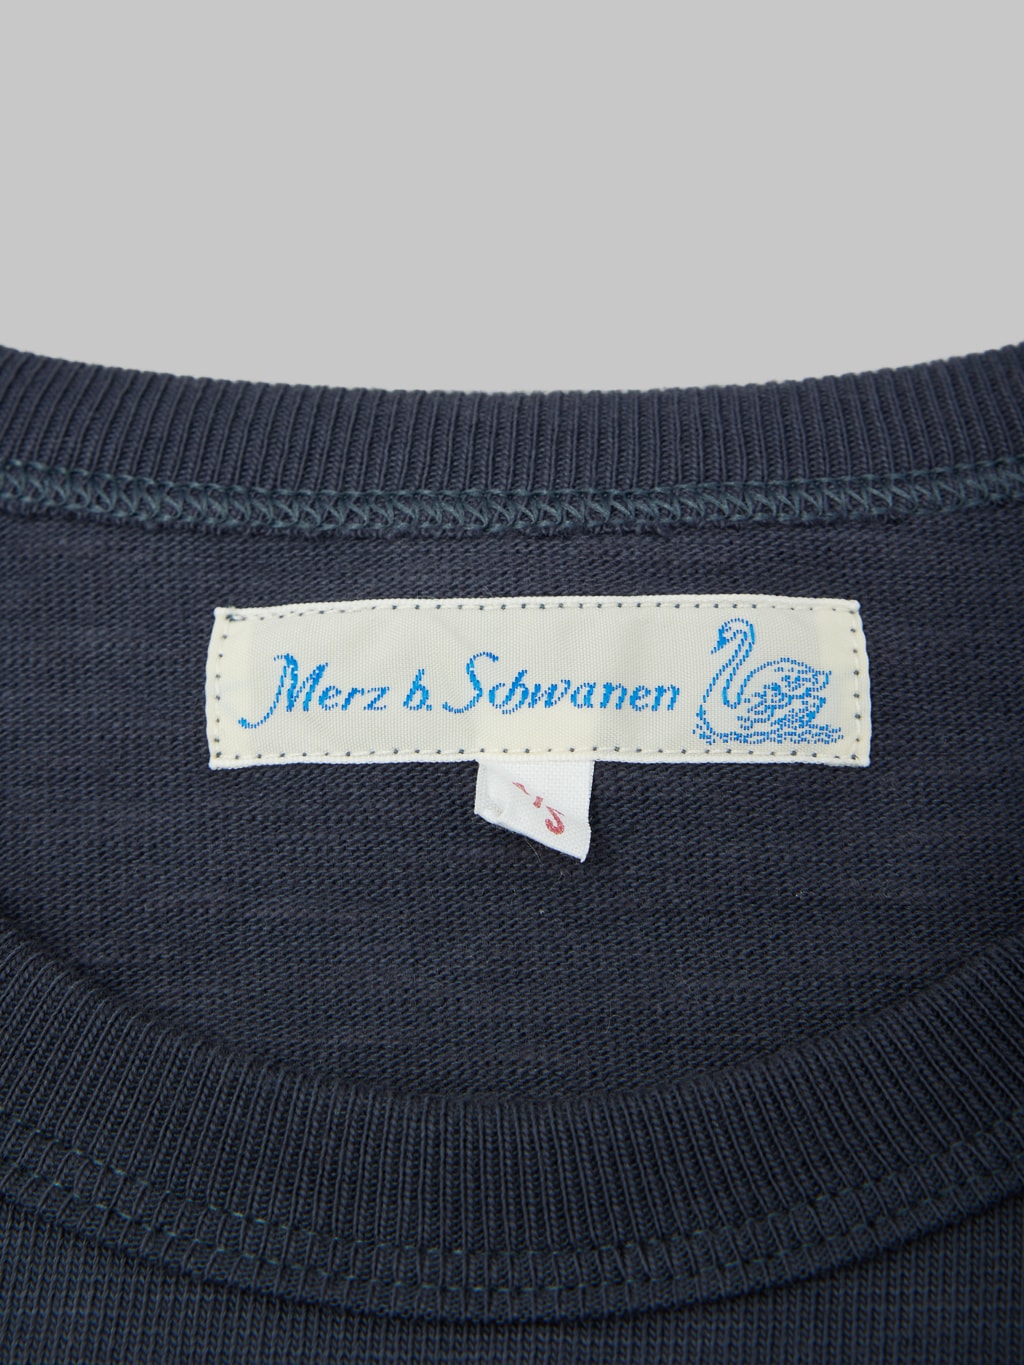 merz b schwanen good originals loopwheeled Tshirt navy size label